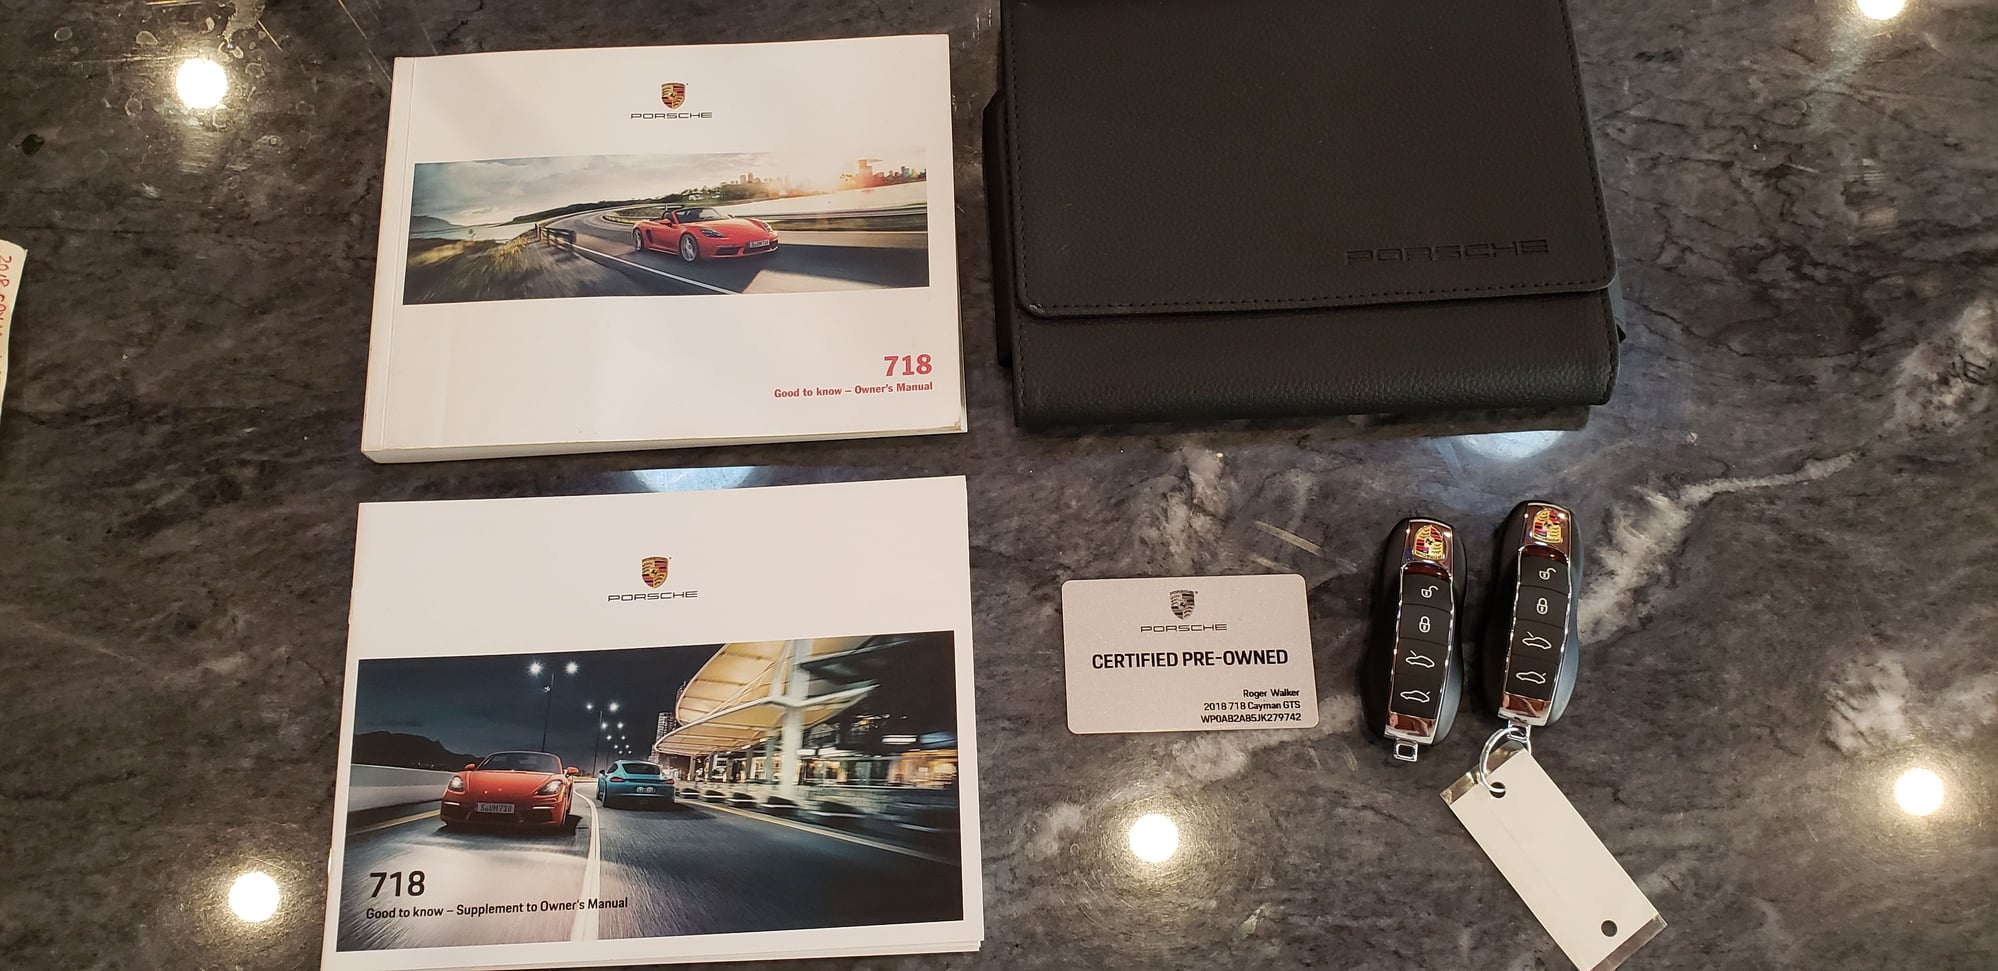 2018 Porsche 718 Cayman - 2018 Cayman GTS, CPO, 6sp manual, Carmine Red $83,500 - Used - San Diego, CA 92008, United States